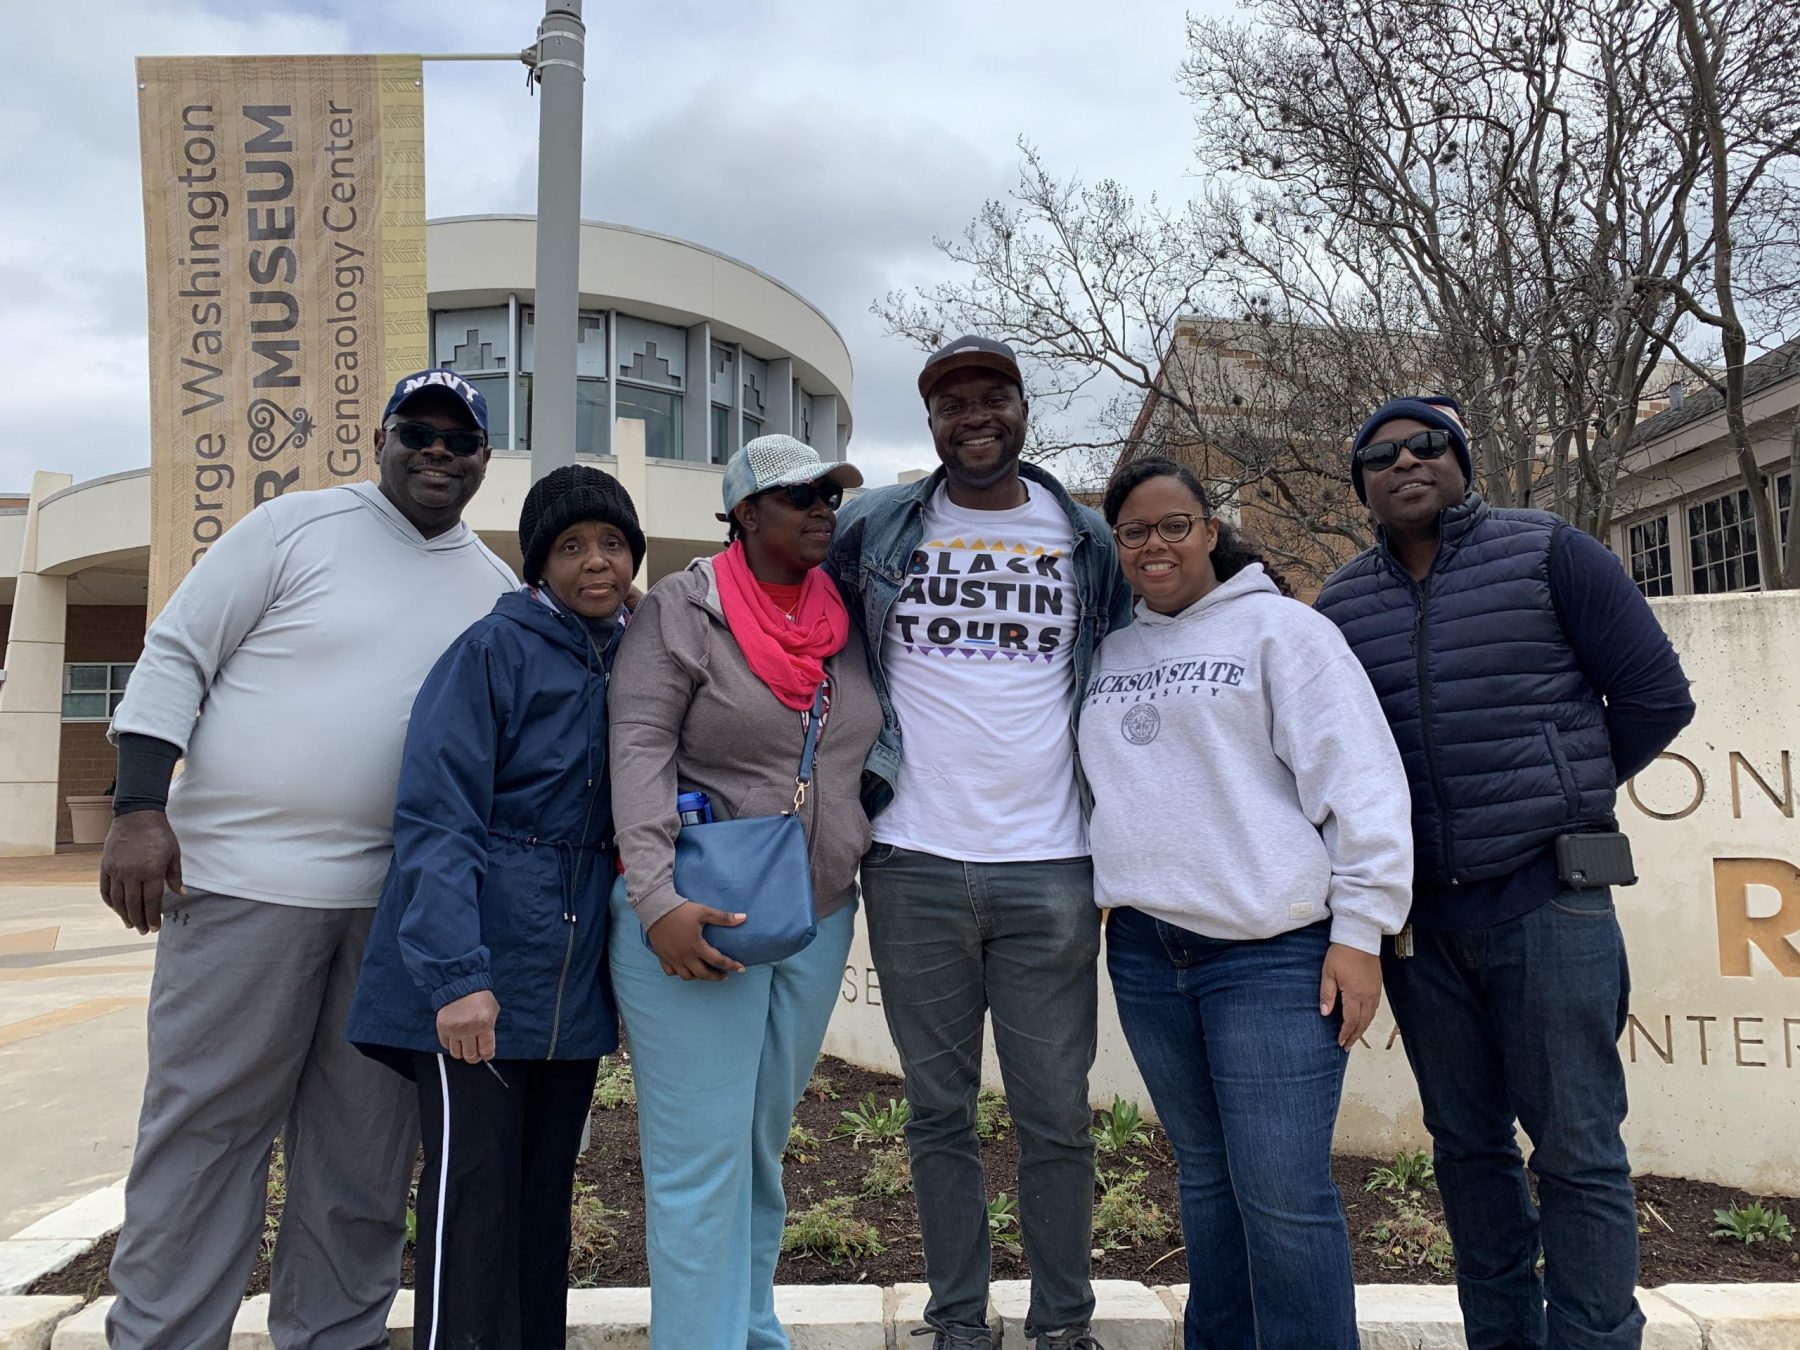 black austin tour group outside the George Washington Carver Museum in austin texas